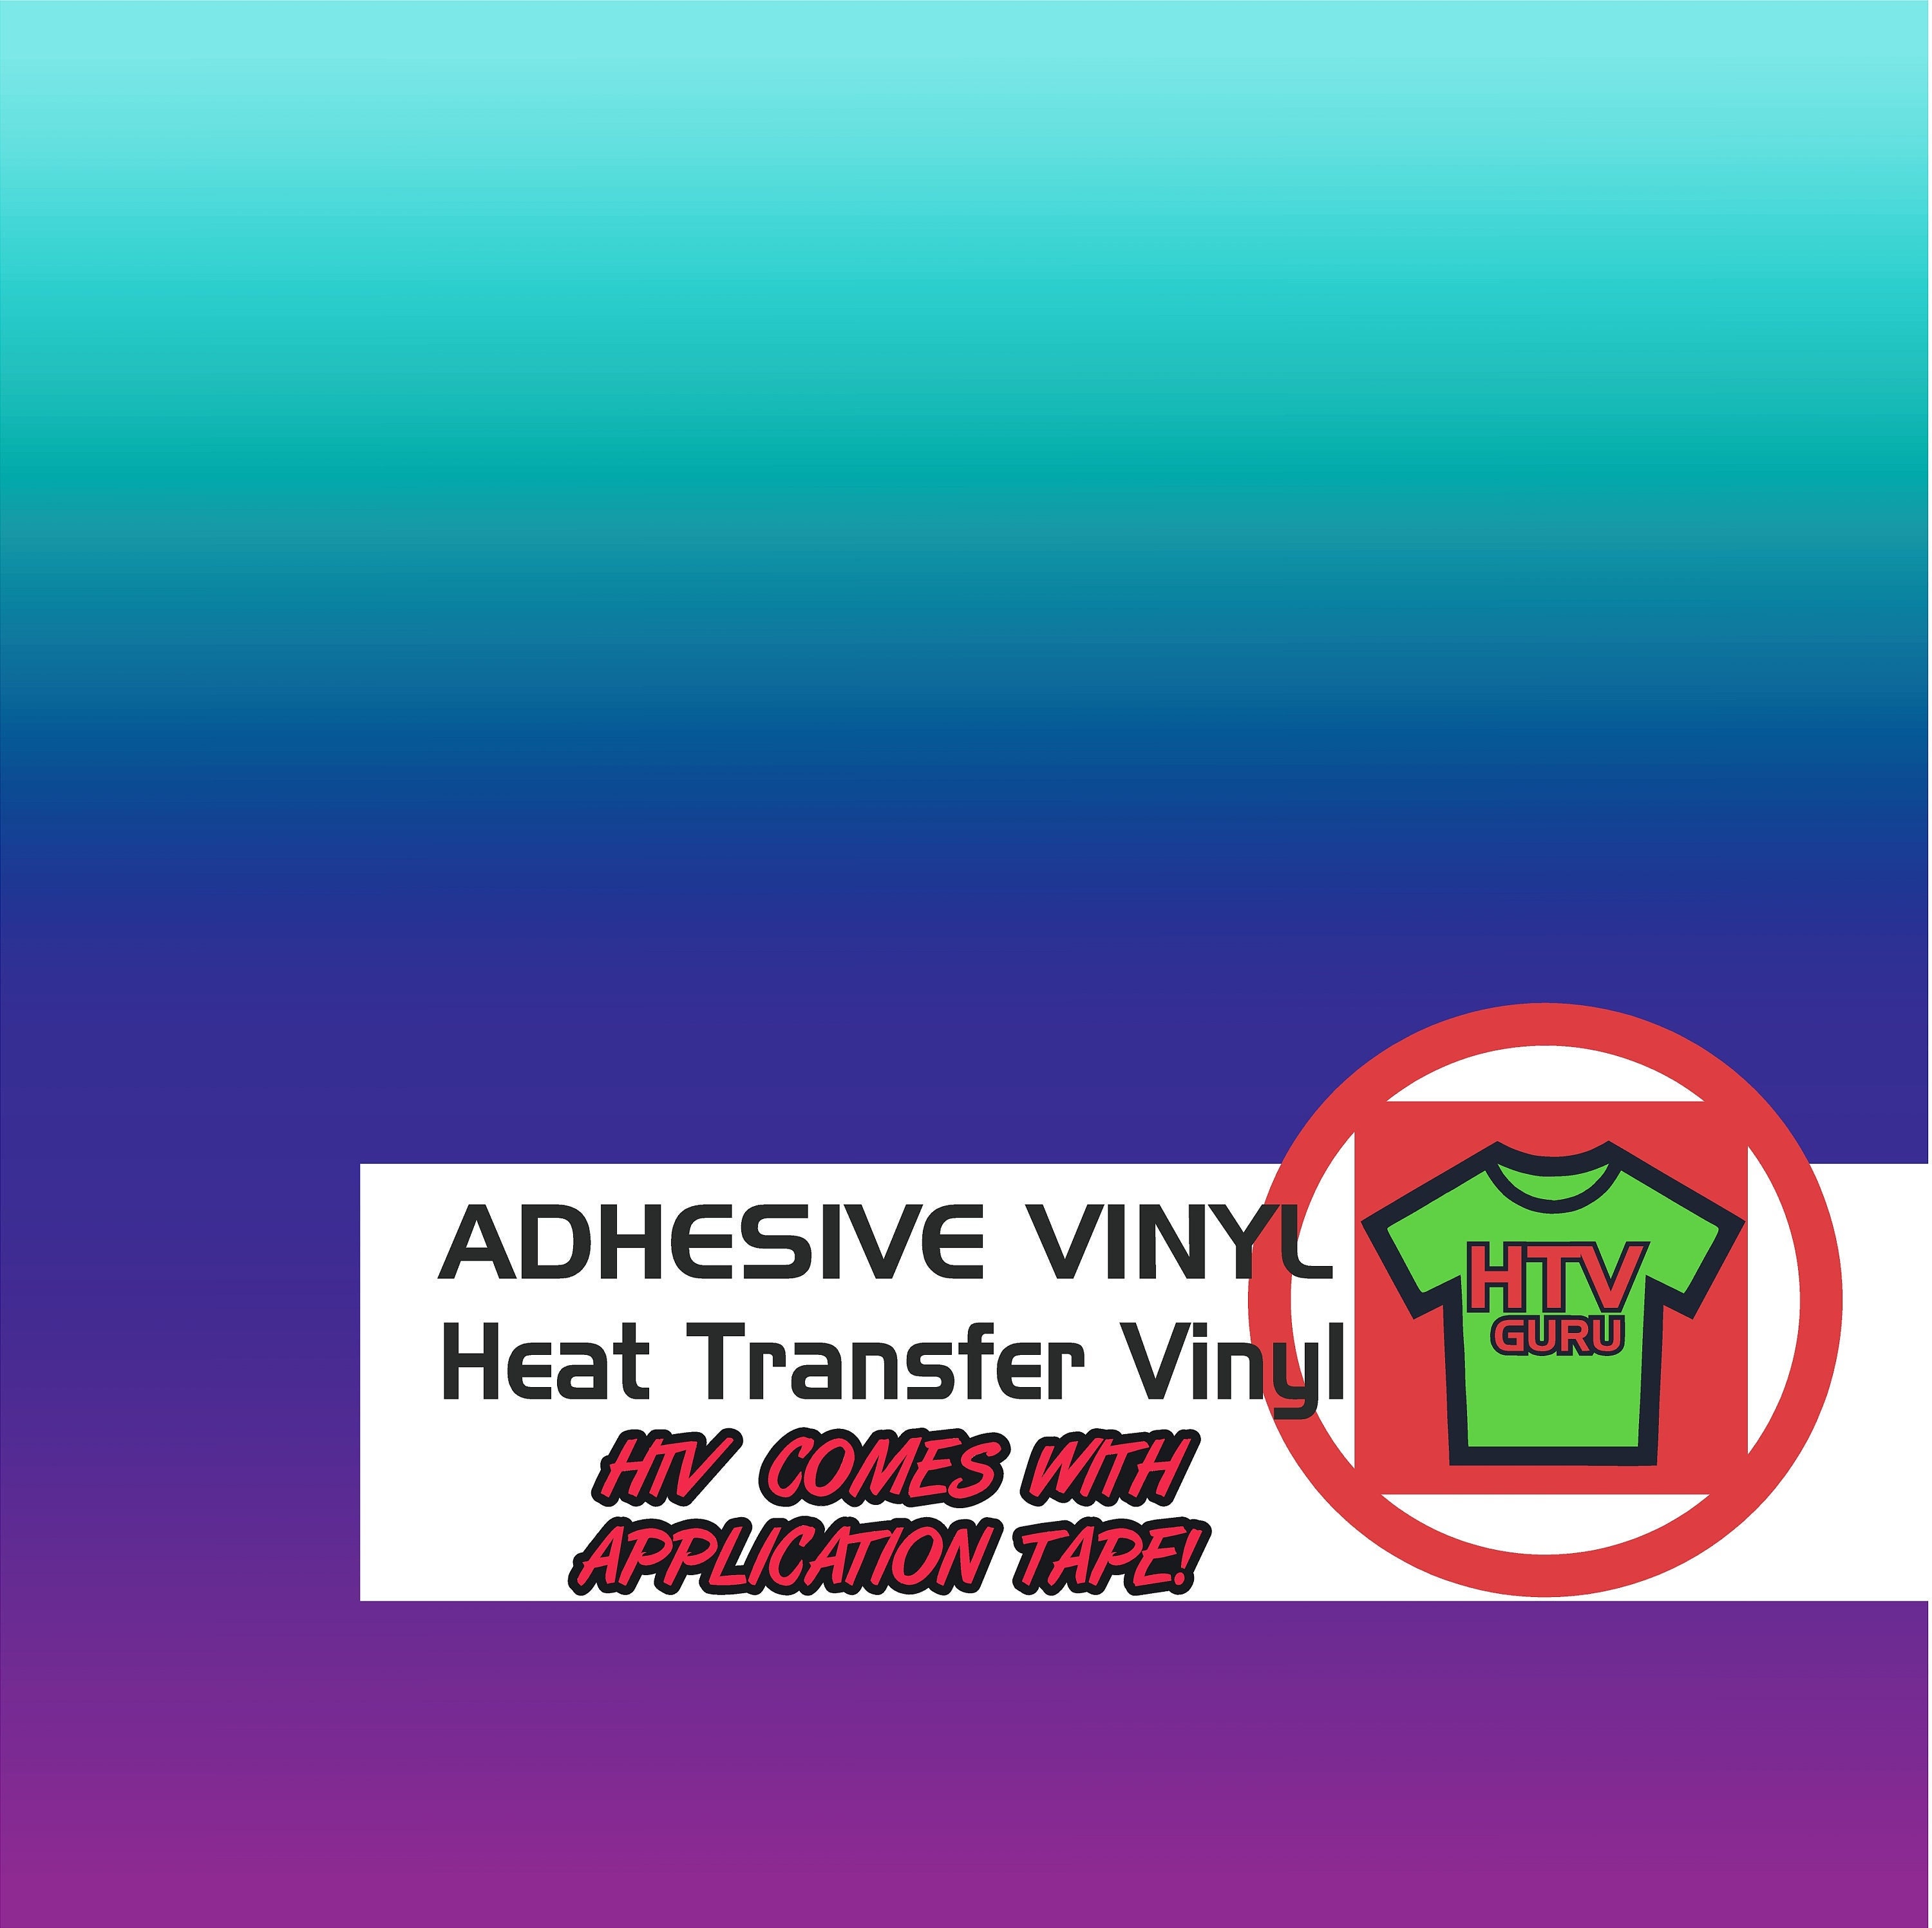 Rose Gold Vinyl, Printed Vinyl, Adhesive Vinyl, Heat Transfer Vinyl,  Pattern Heat Transfer, Printed HTV or ADHESIVE, Iron On 